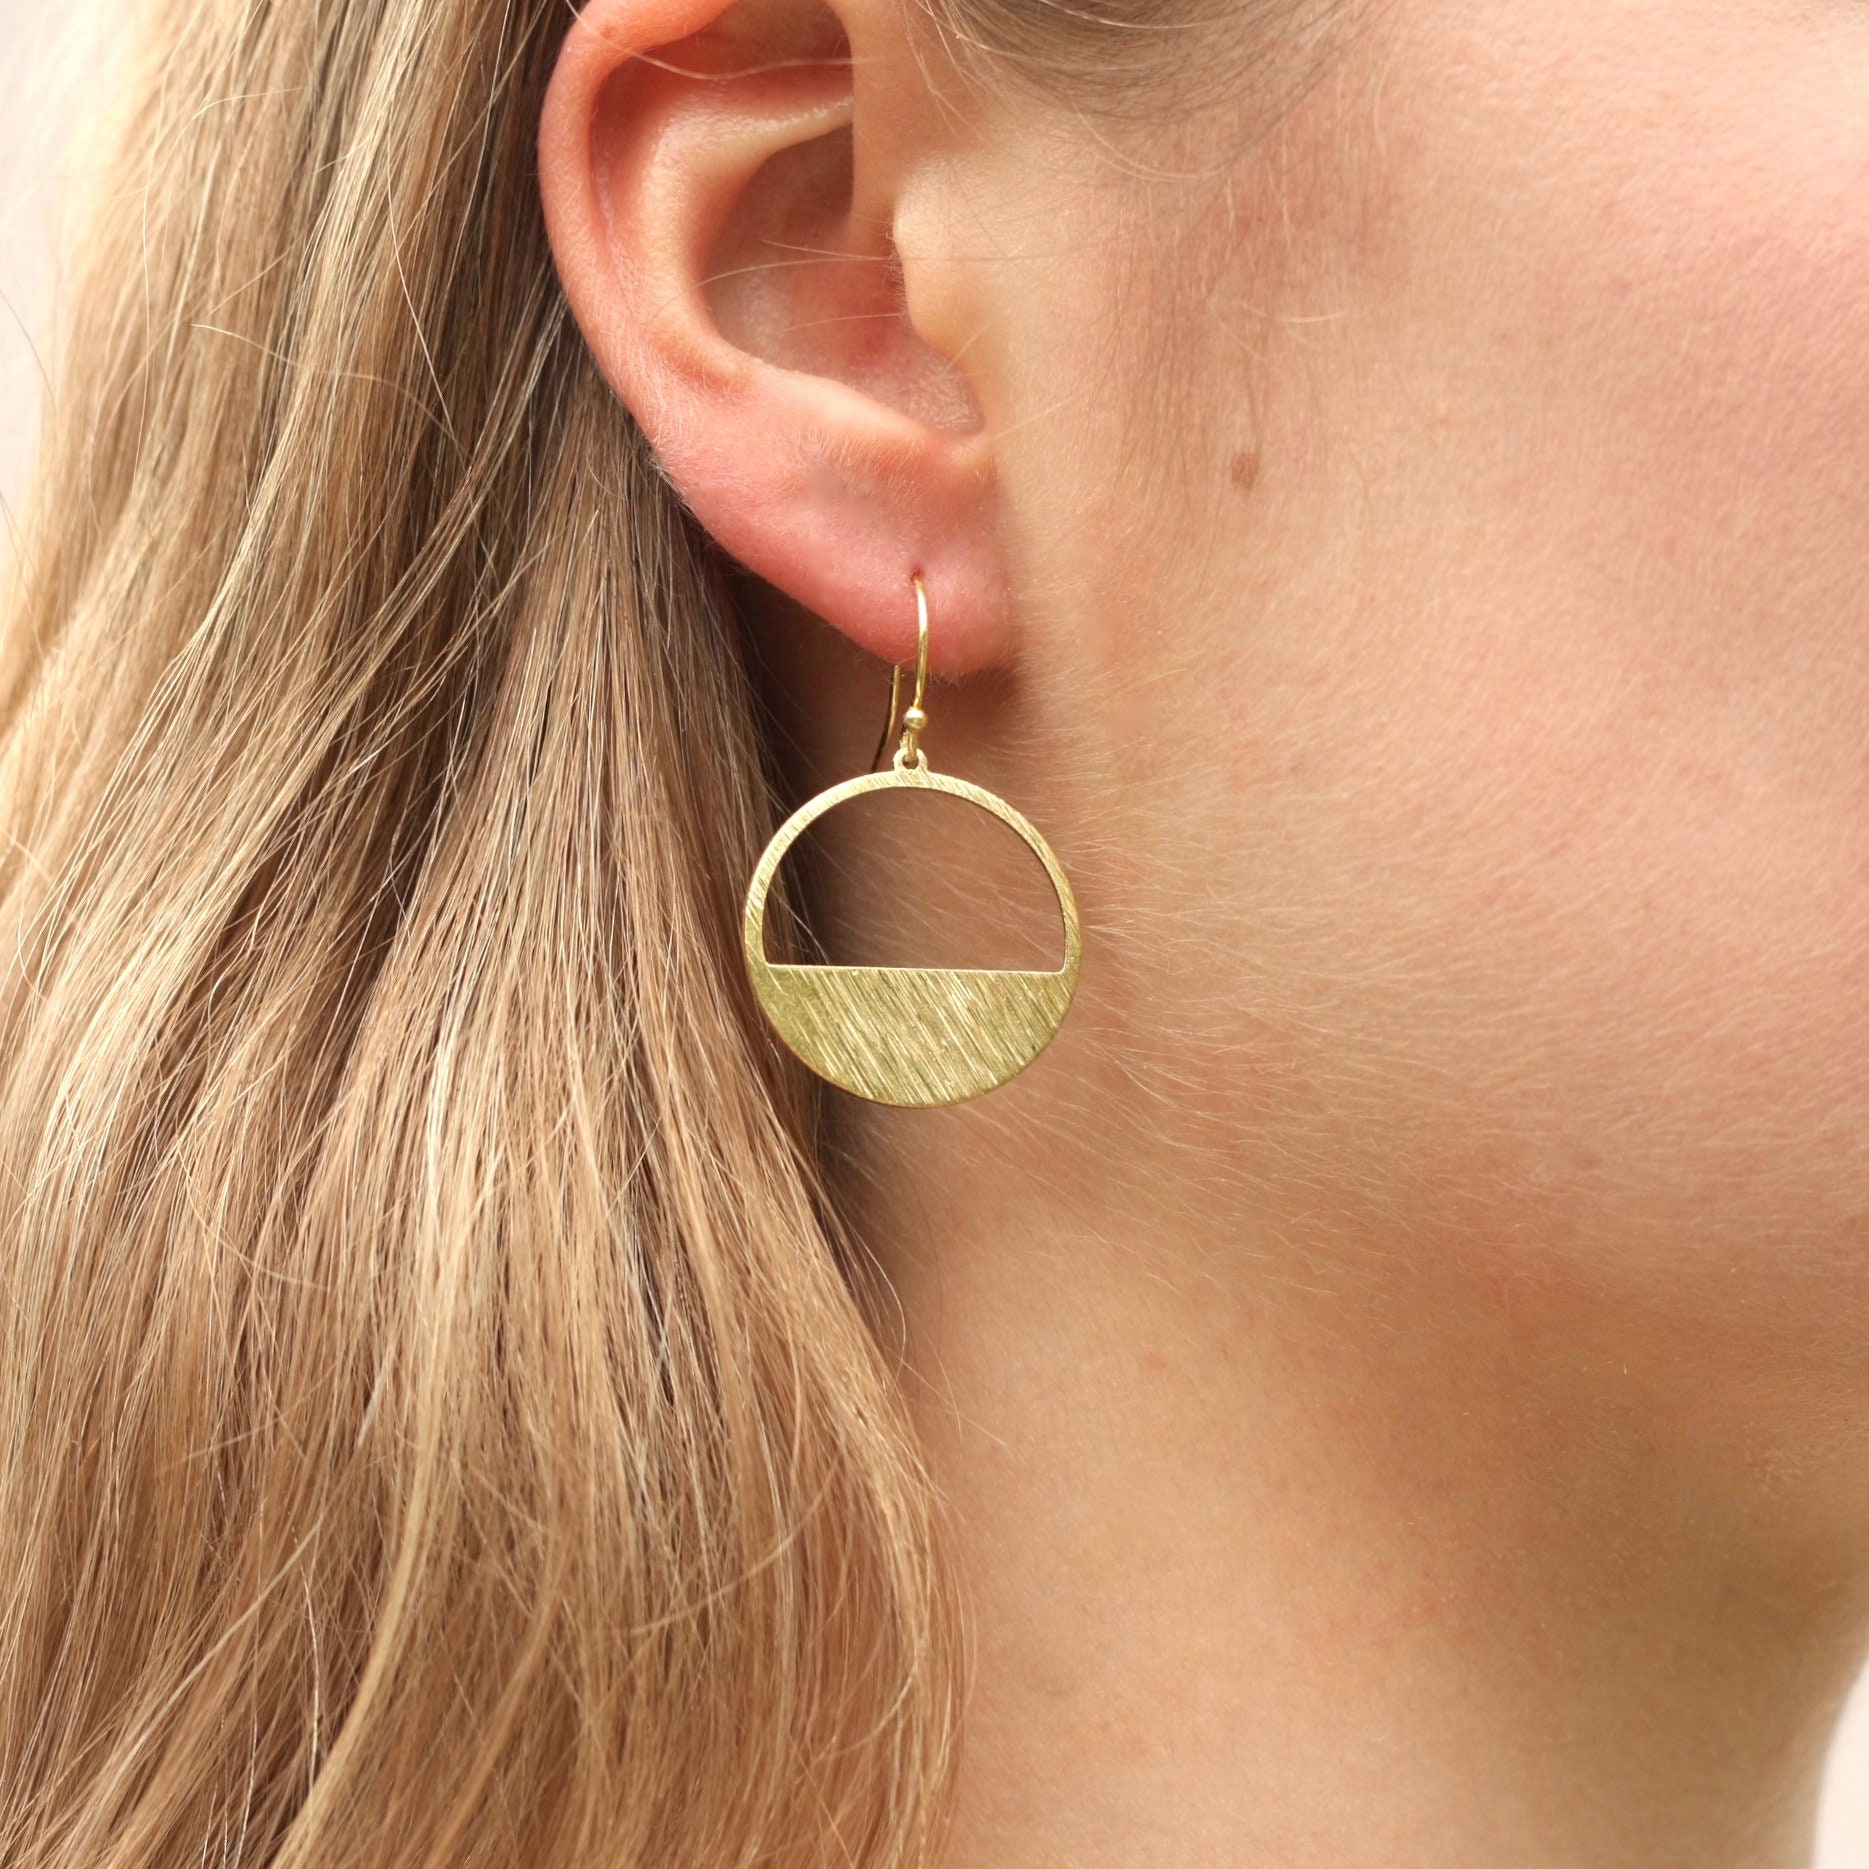 Forfatning Træts webspindel infrastruktur Round Brass Geometric Earrings Modern Brass Jewelry Textured | Etsy